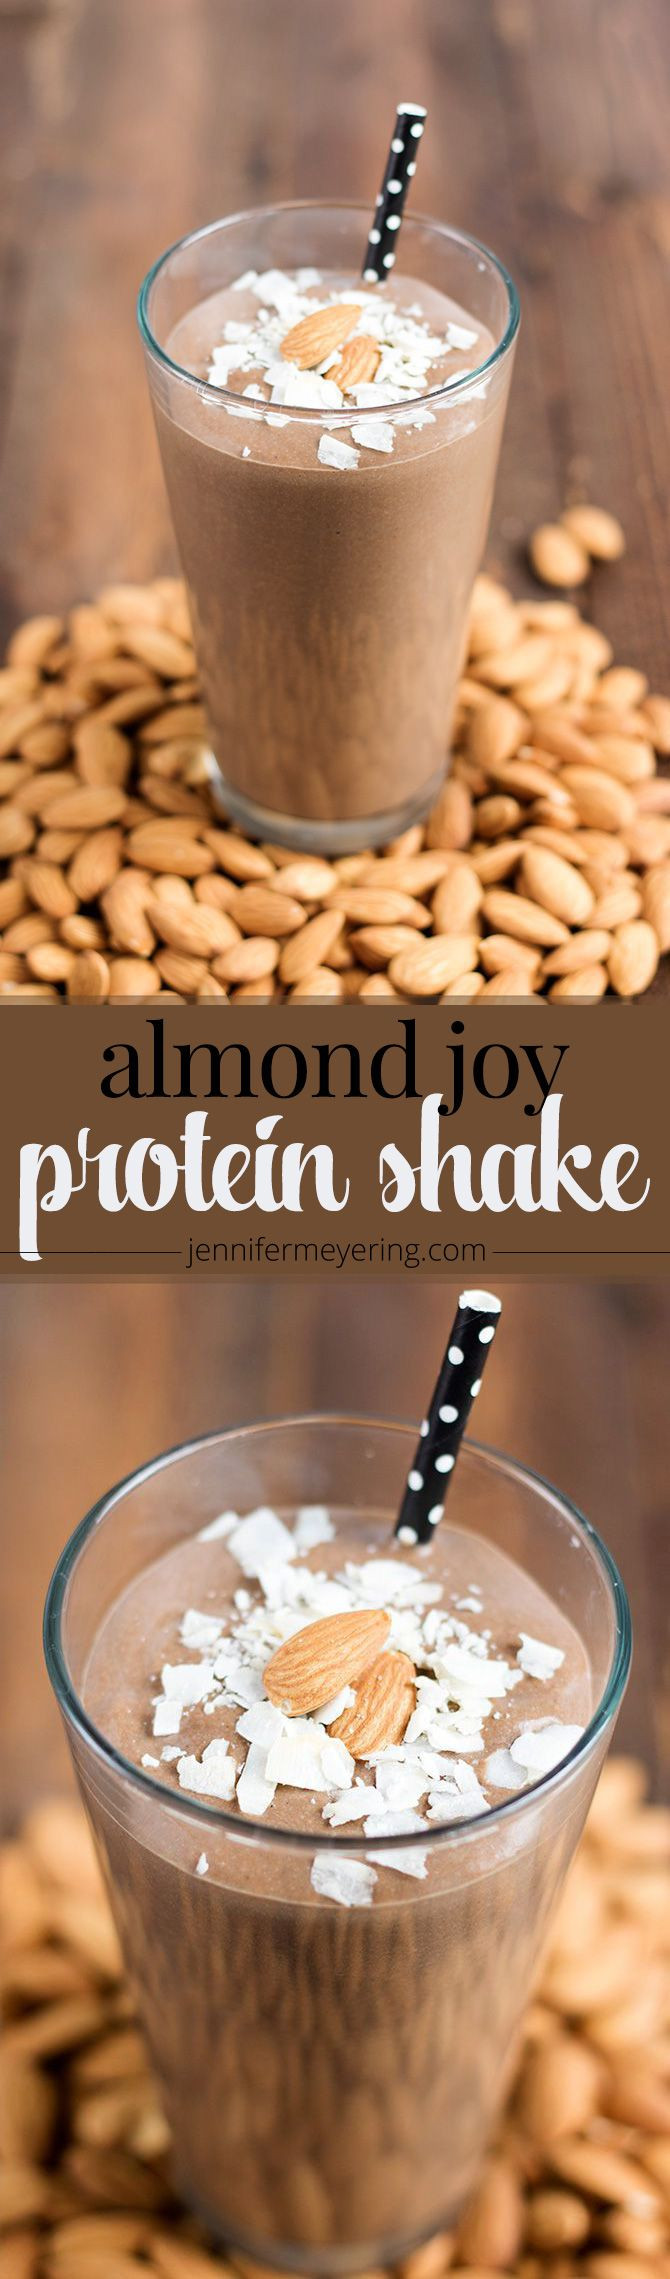 Diabetic Smoothies With Almond Milk
 Almond Joy Protein Shake JenniferMeyering